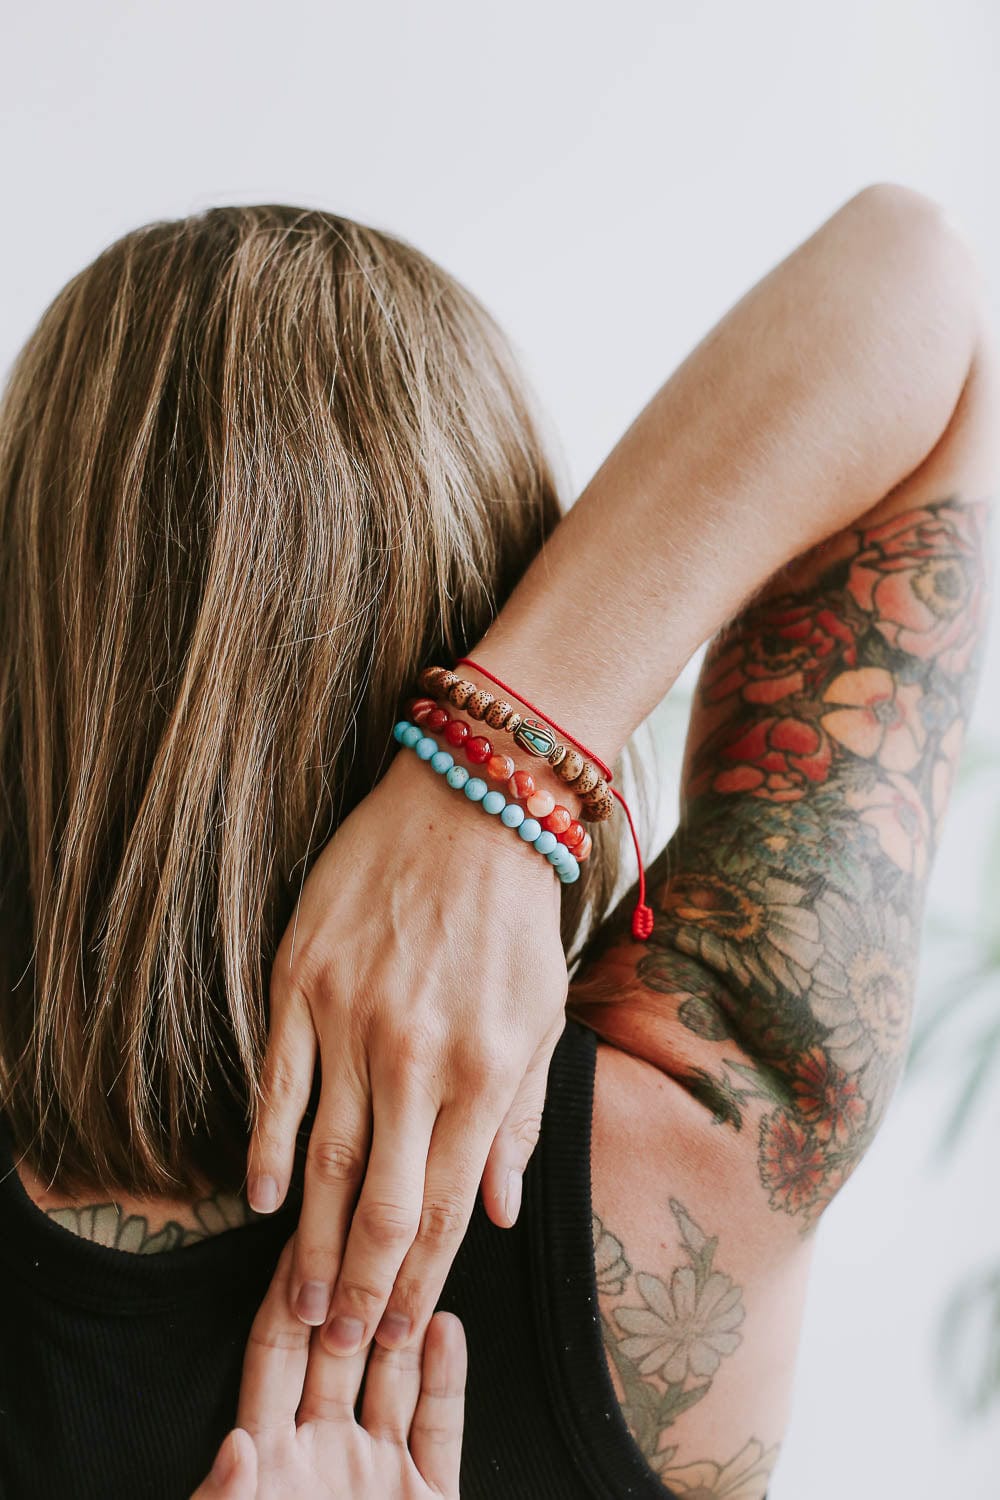 5,759 Arm Bracelet Tattoo Images, Stock Photos, 3D objects, & Vectors |  Shutterstock